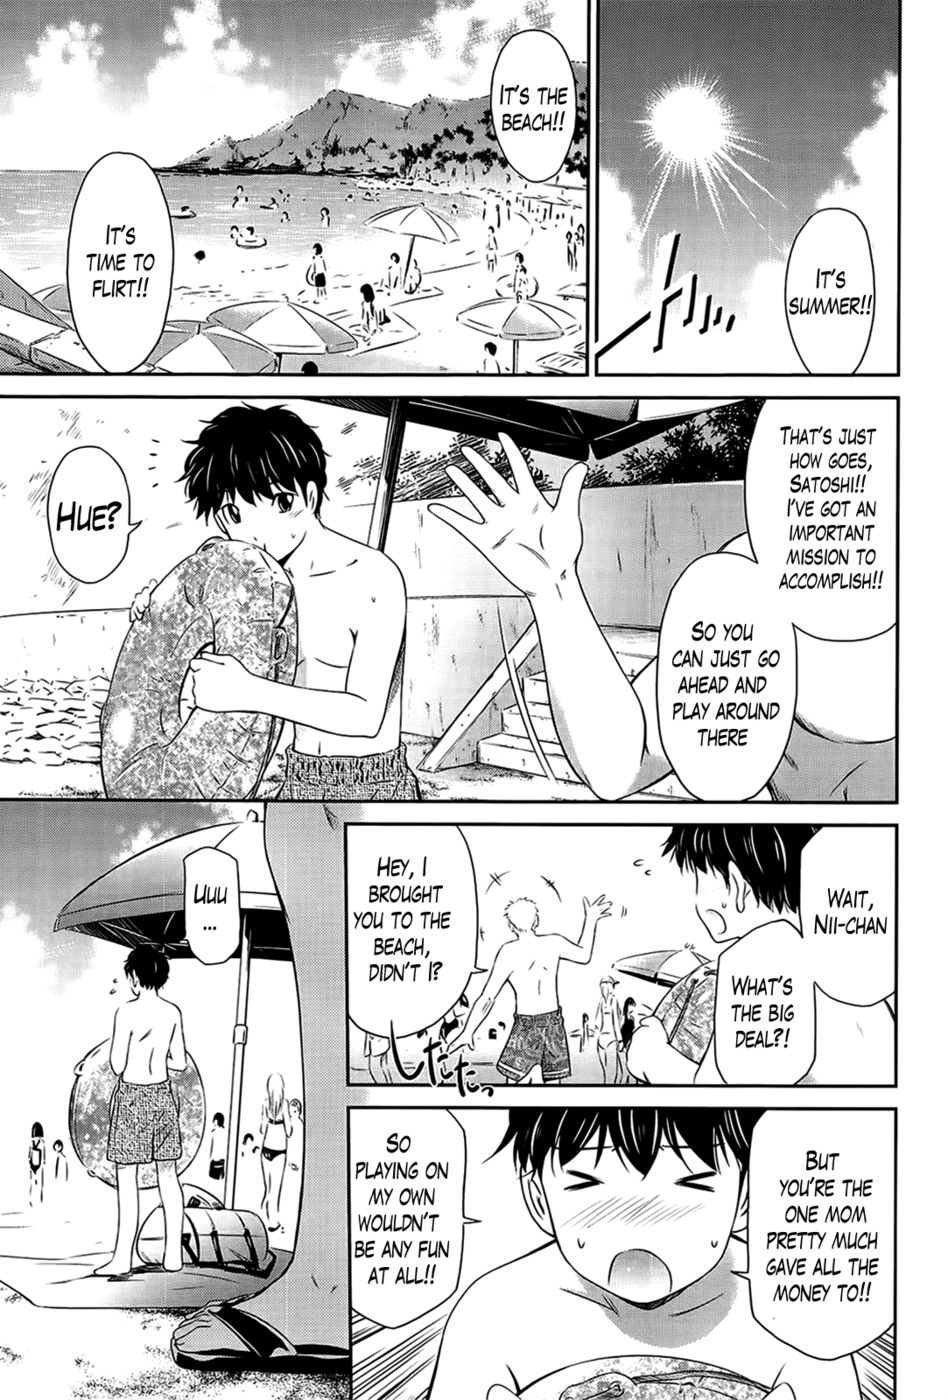 Hentai Manga Comic-A Very Hot Middle-Chapter 2-Temptation Beach-1